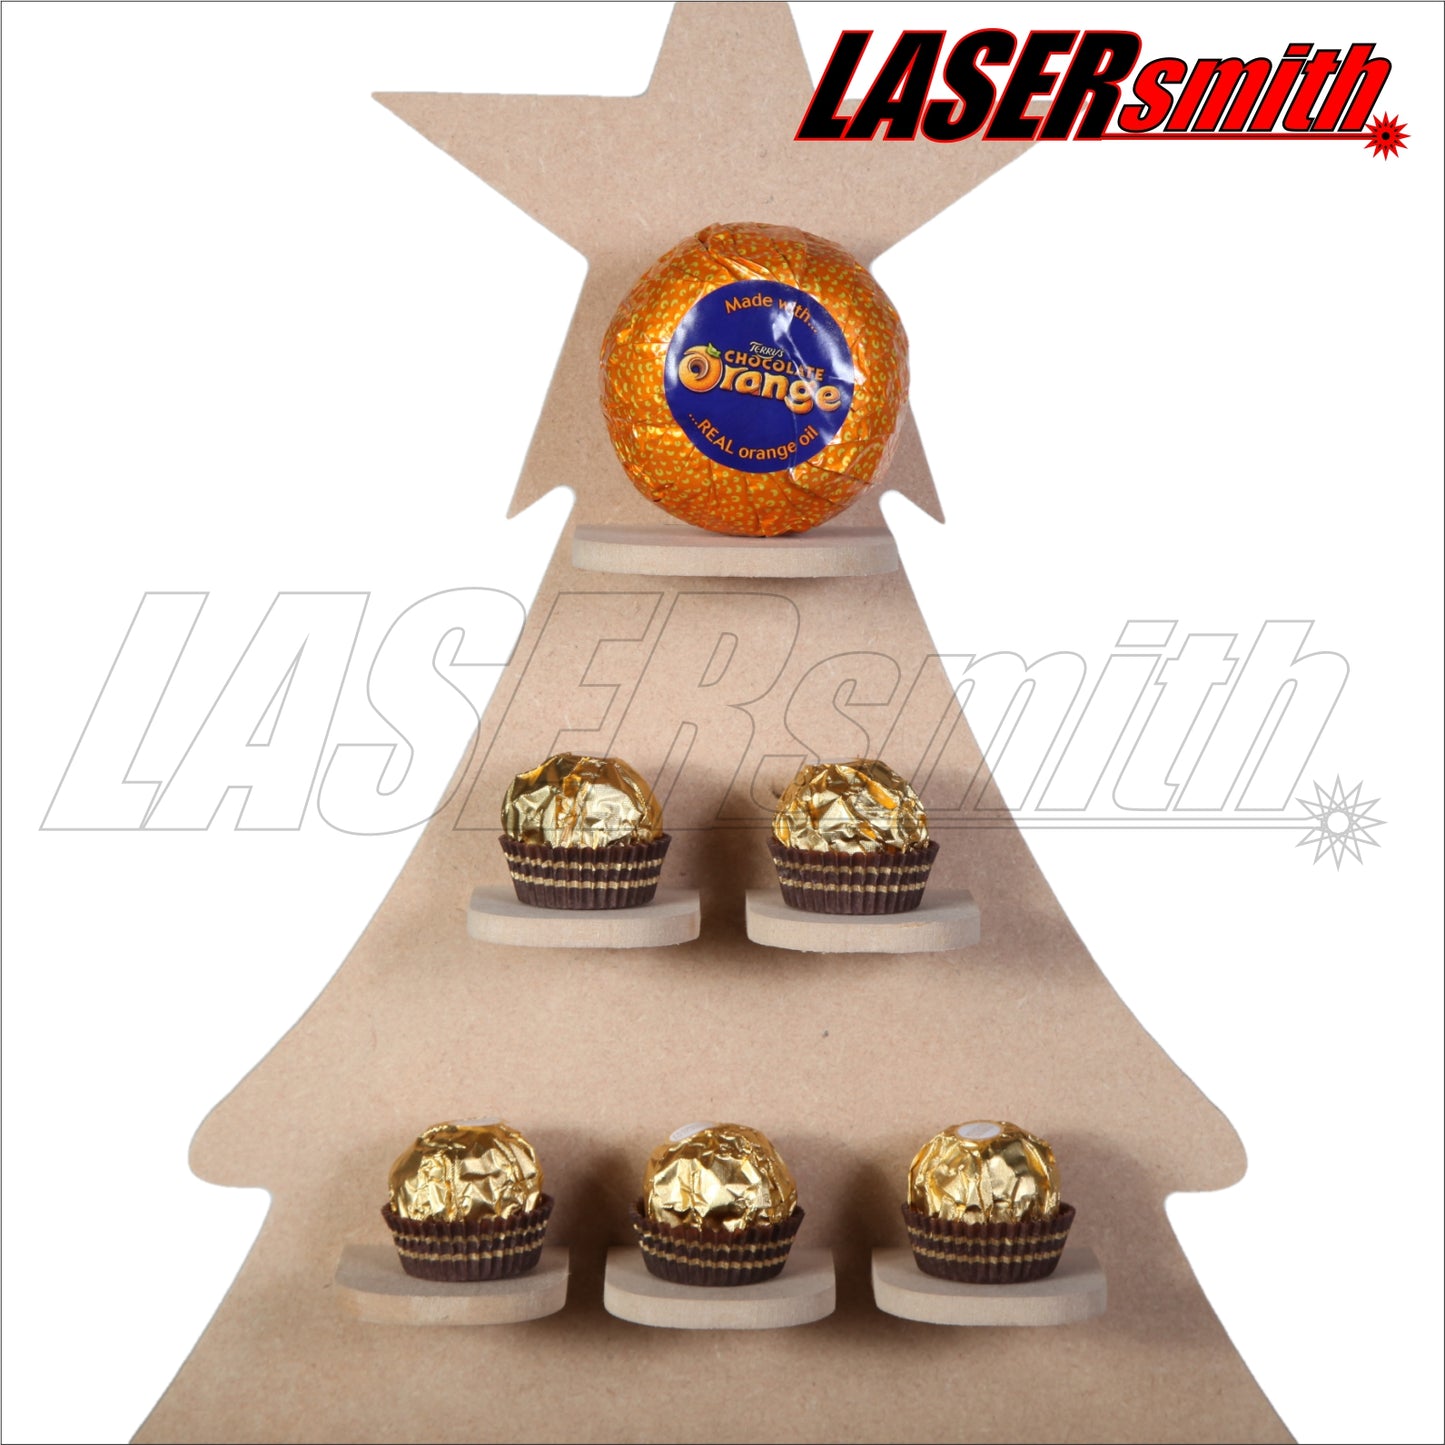 Christmas Tree Advent Calendar for Chocolate Eggs